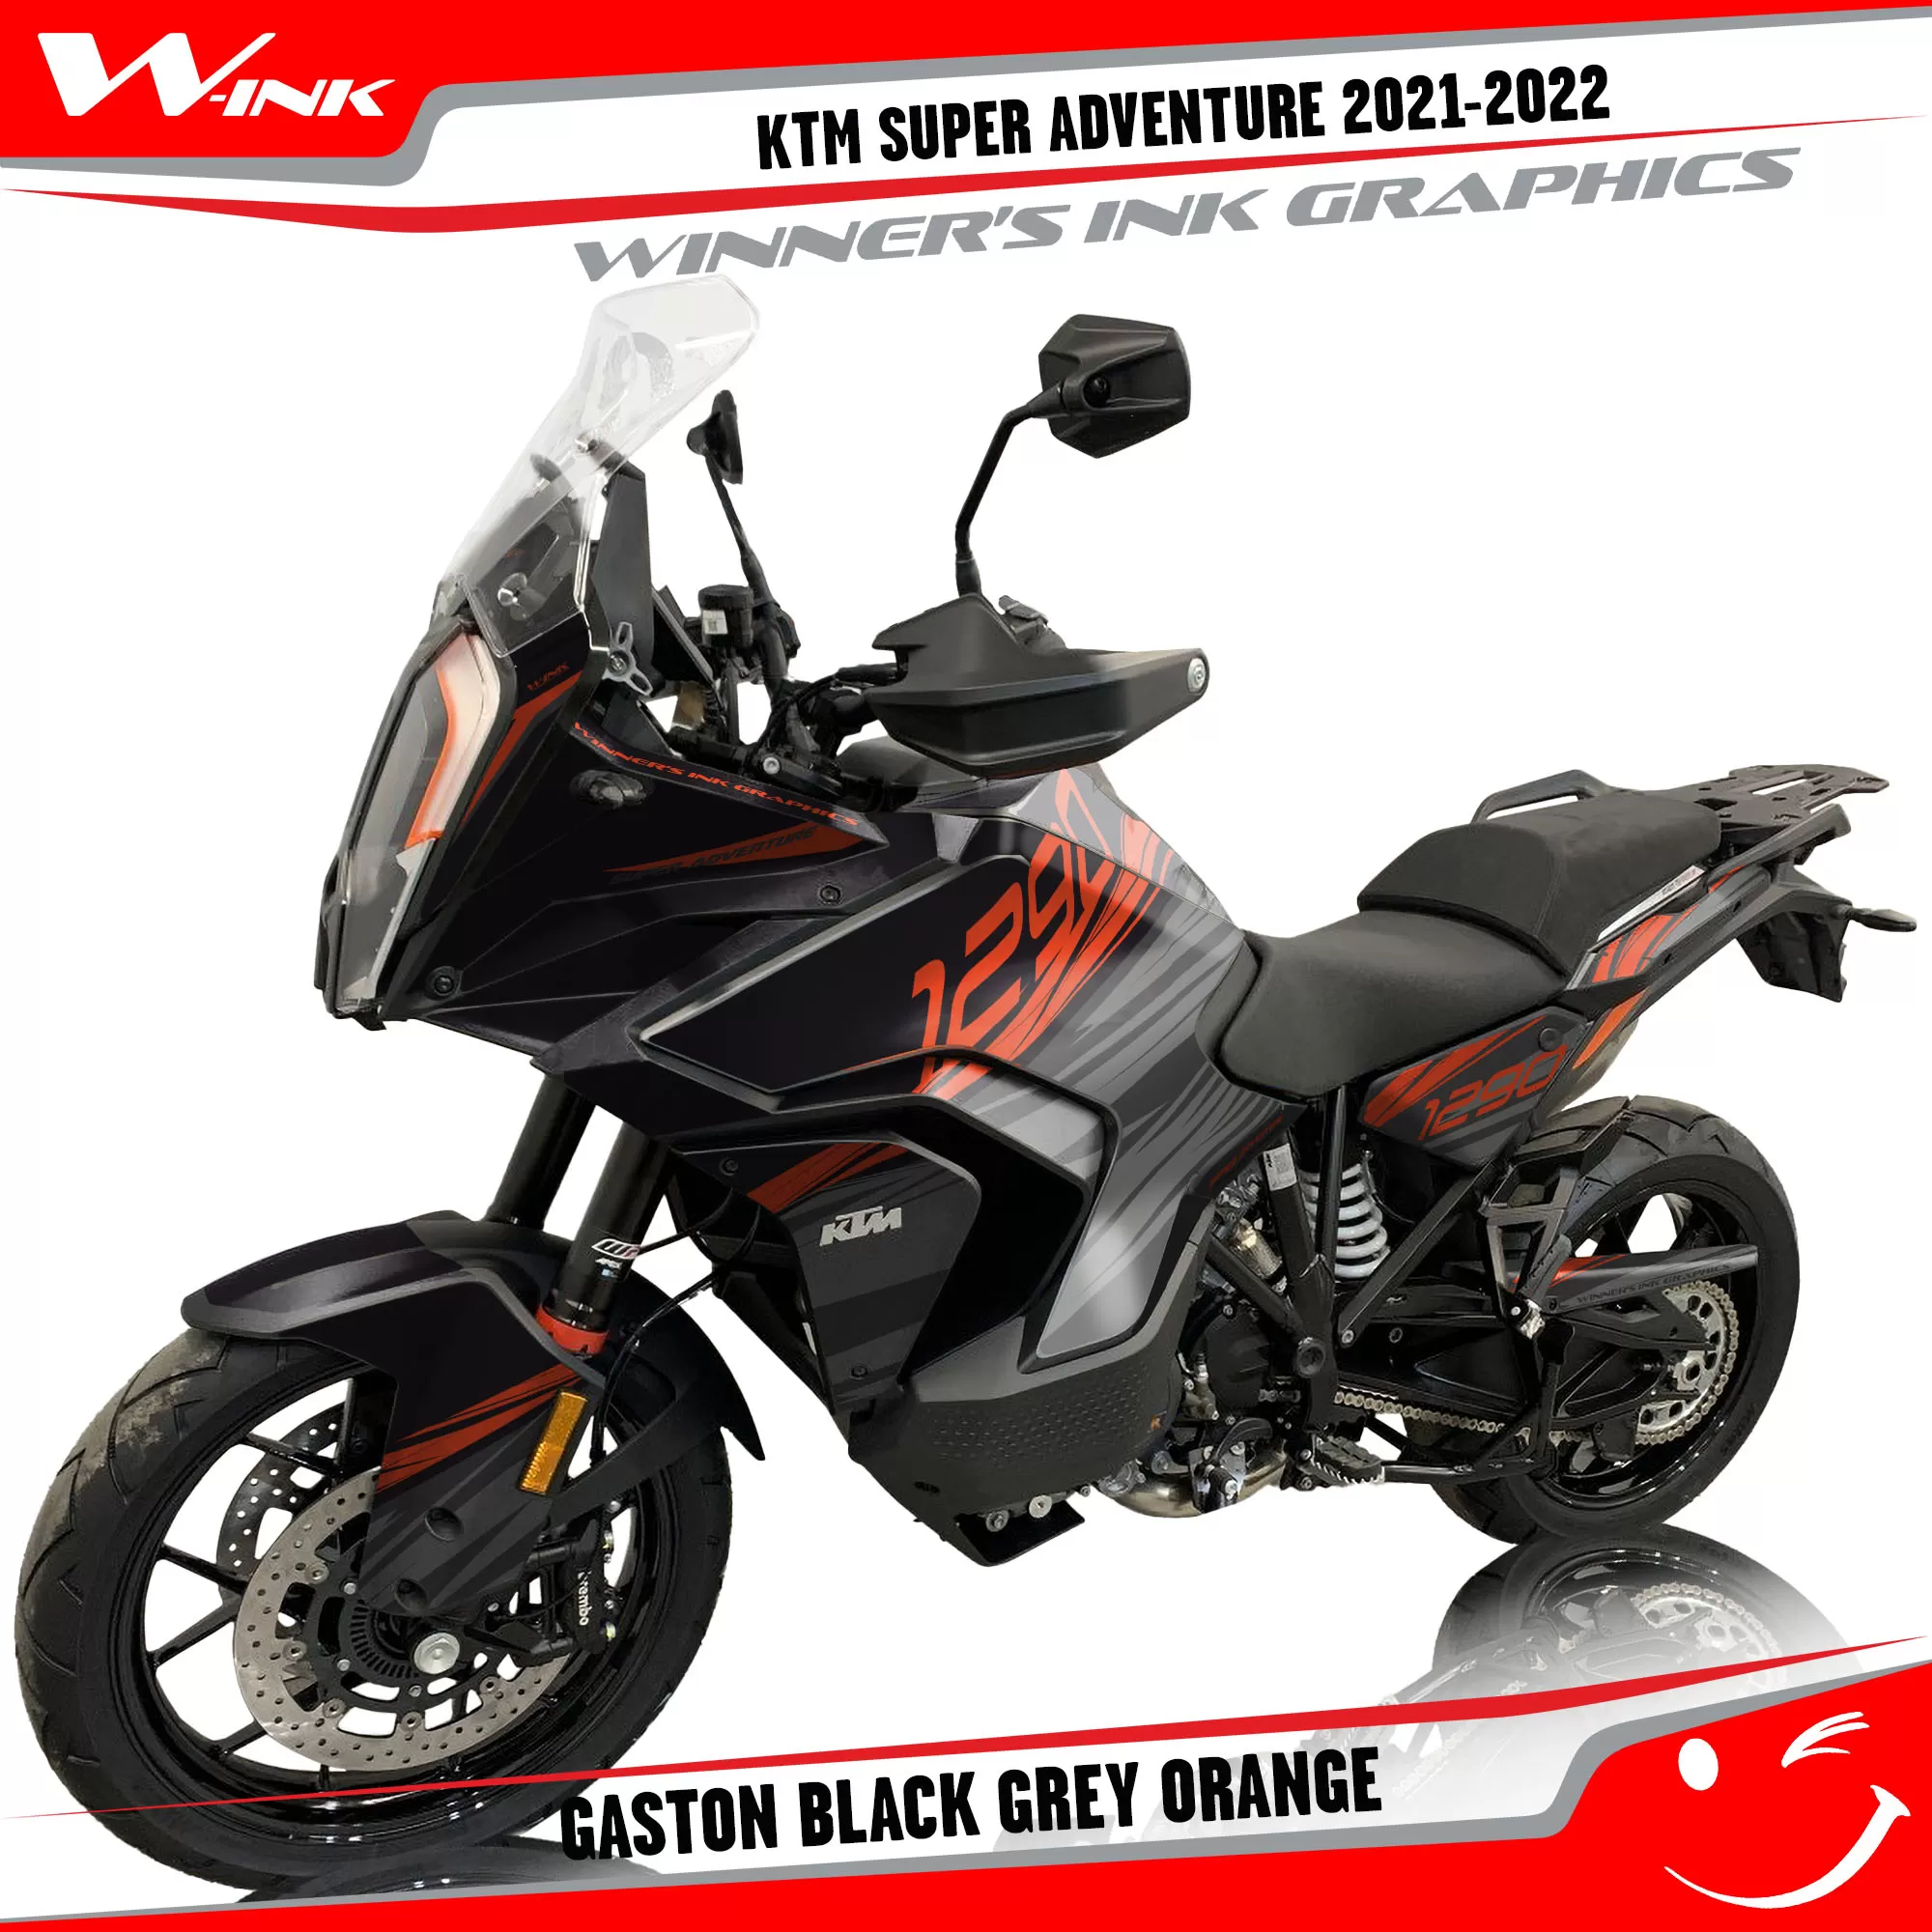 KTM-Super-Adventure-S-2021-2022-graphics-kit-and-decals-with-designs-Gaston-Black-Grey-Orange